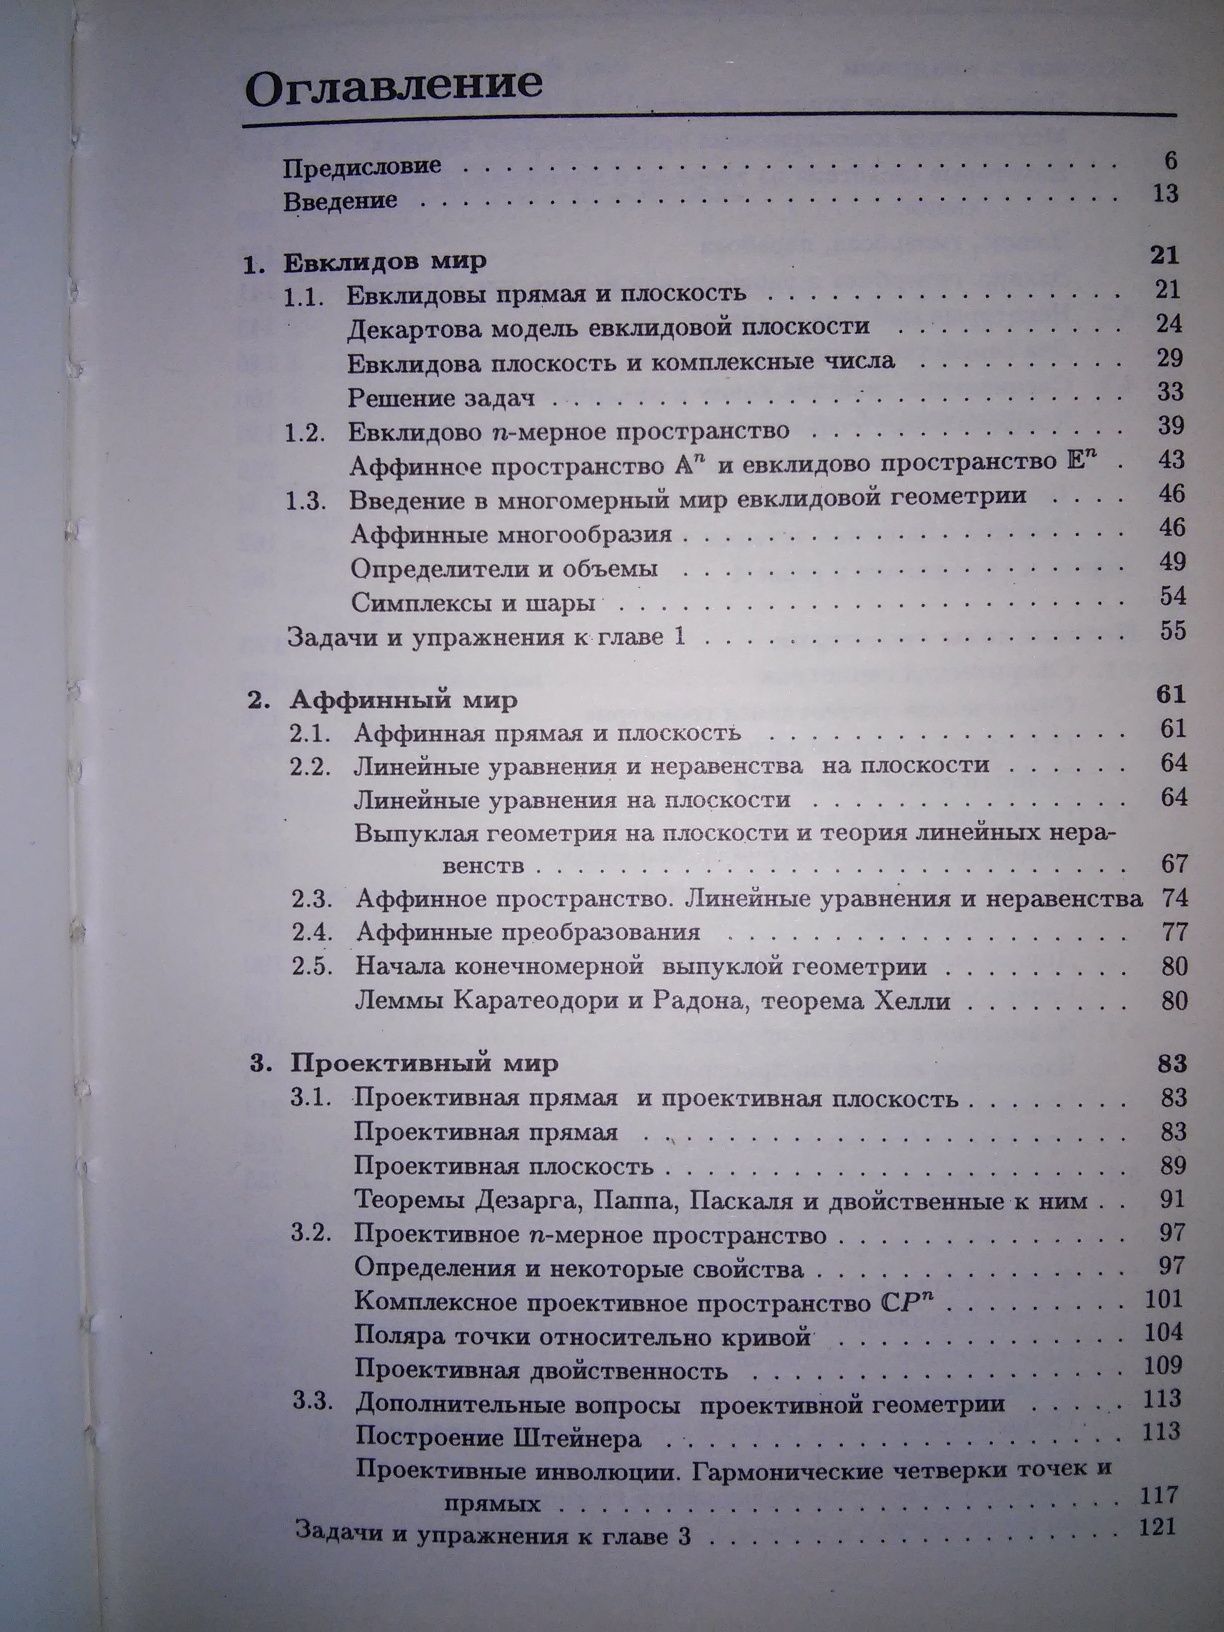 Прасолов Тихомиров Геометрия 1997 р.